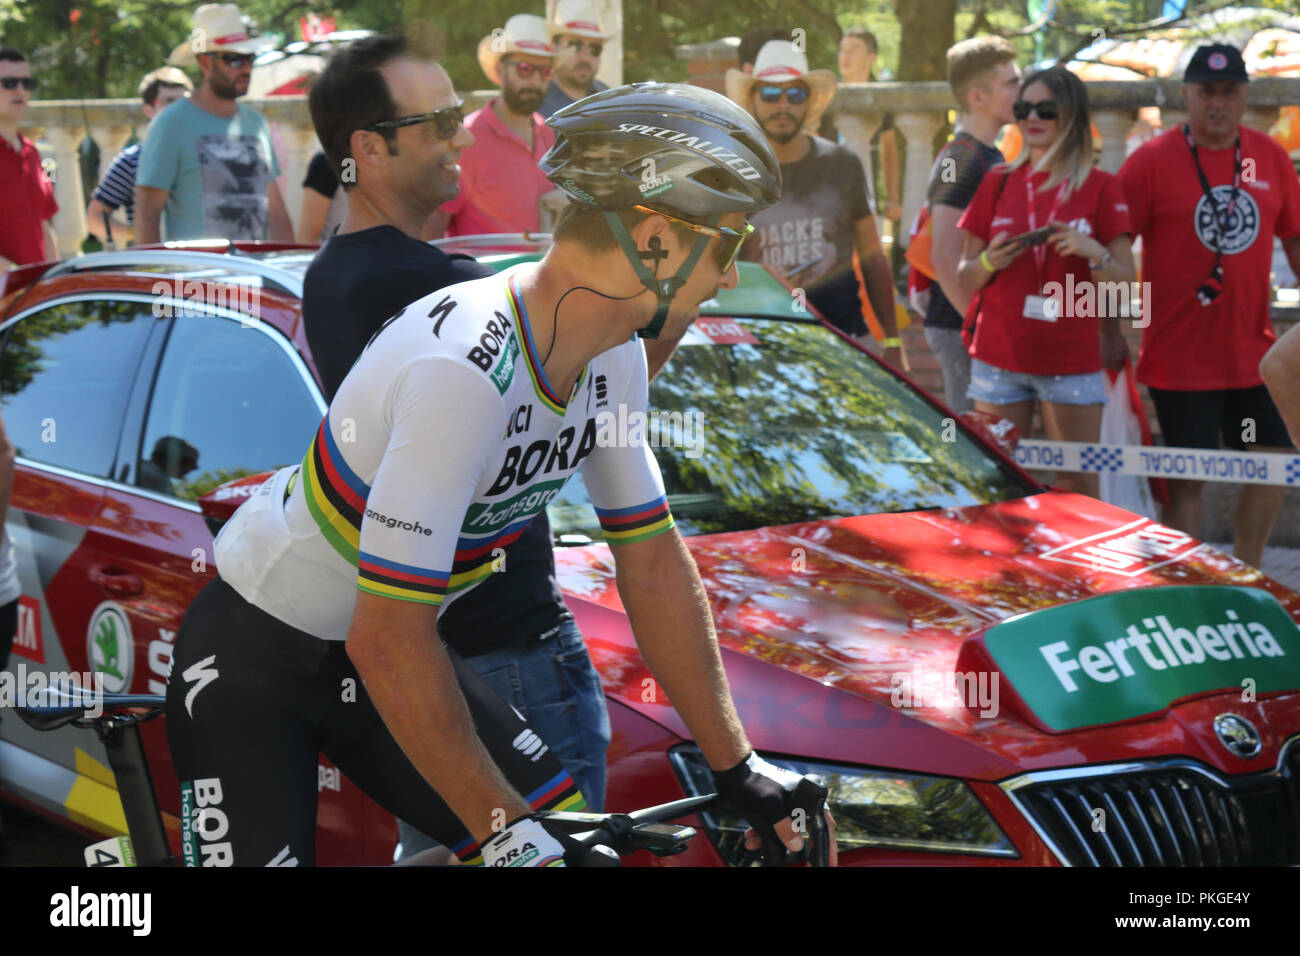 Ejea de los Caballeros, Spanien. 13 Sep, 2018. Peter Sagan nähert sich zu Beginn der Vuelta de Espana, Stufe 18. Isacco Coccato/Alamy leben Nachrichten Stockfoto